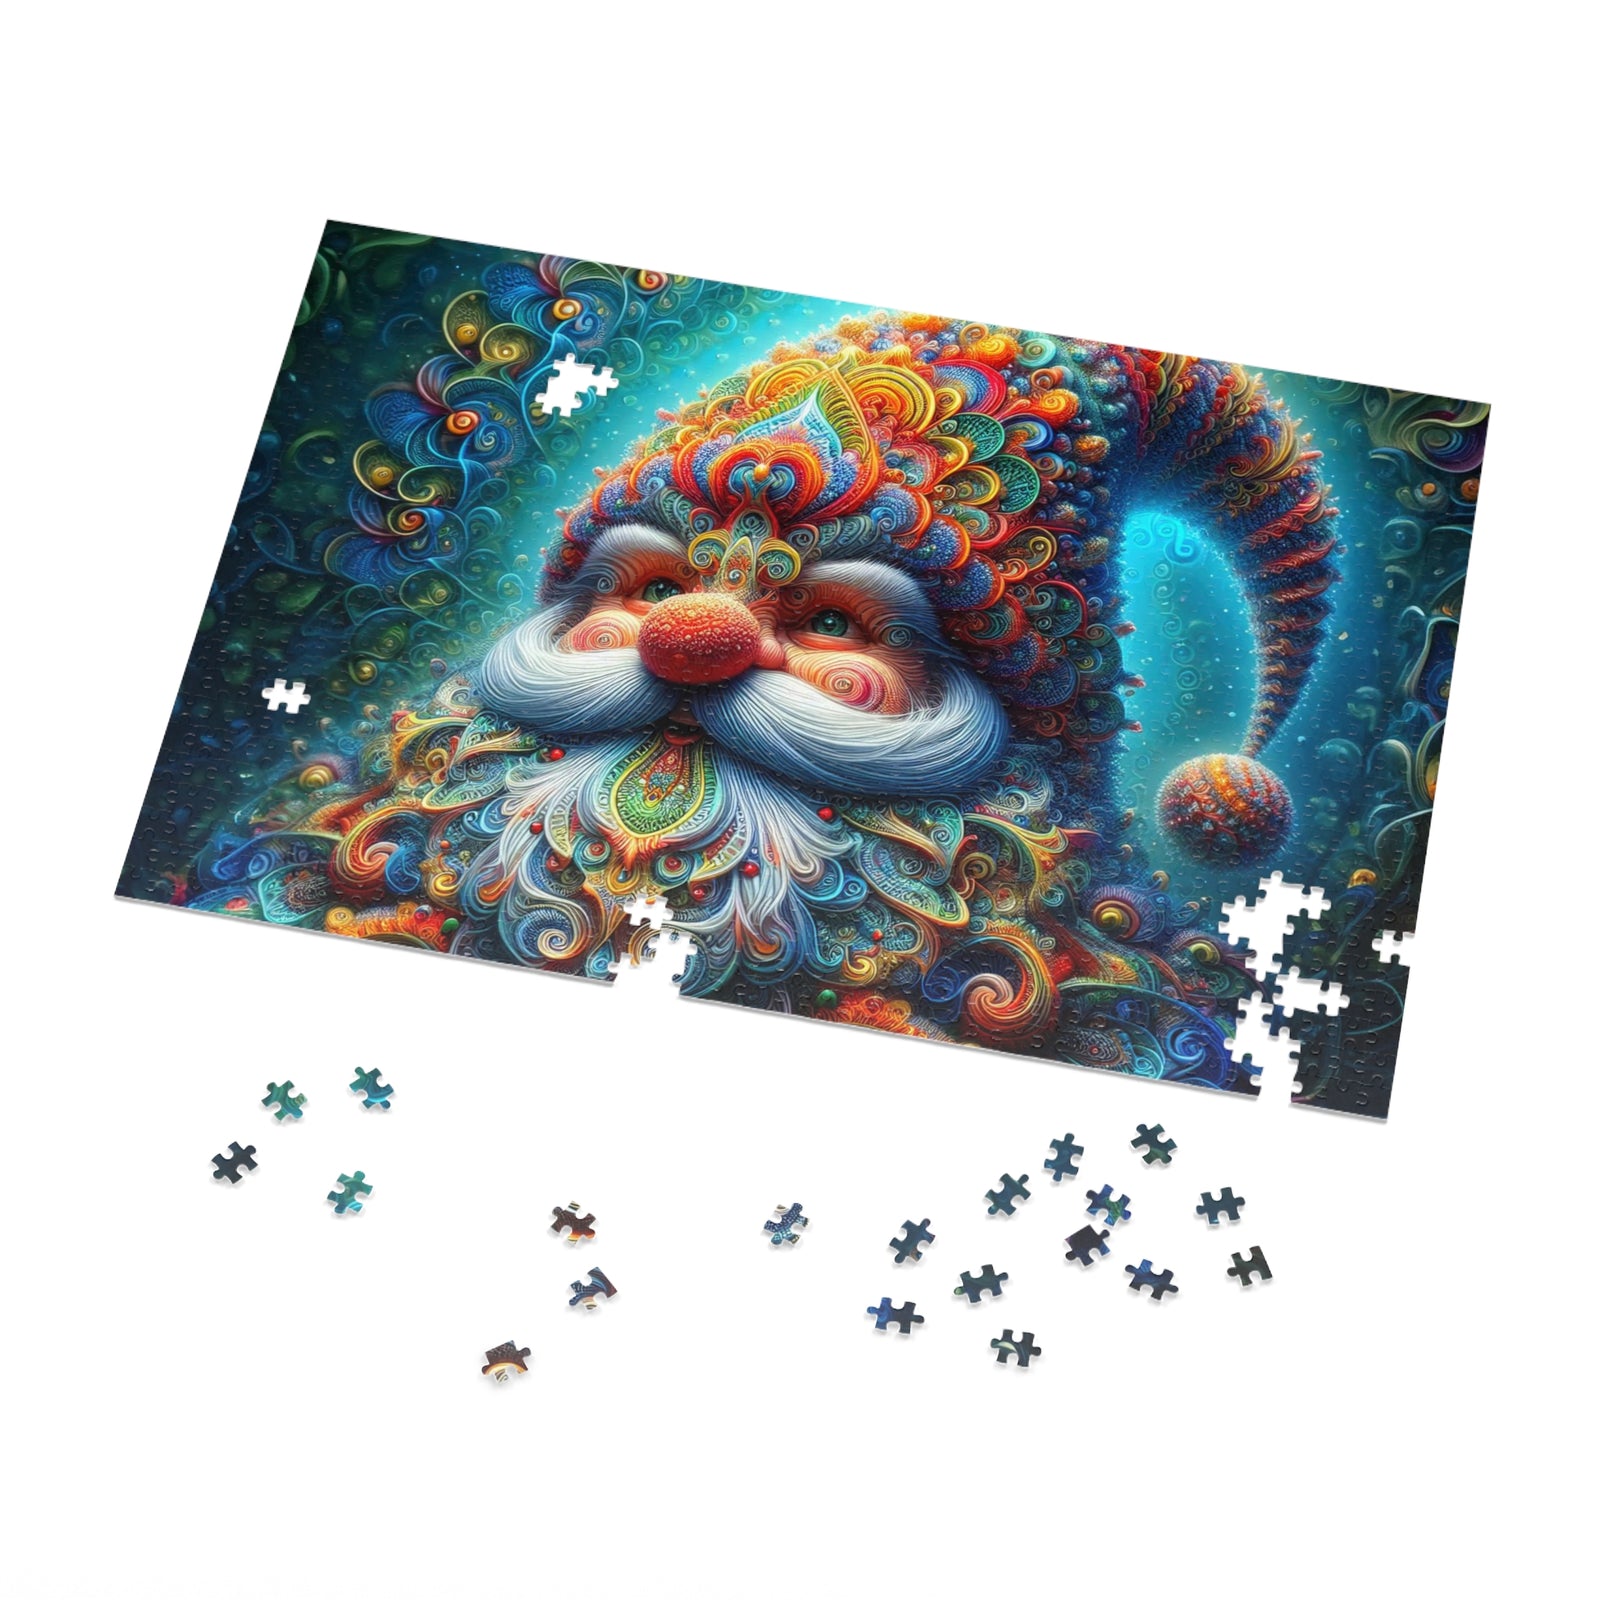 Le puzzle Yuletide Dreamweaver